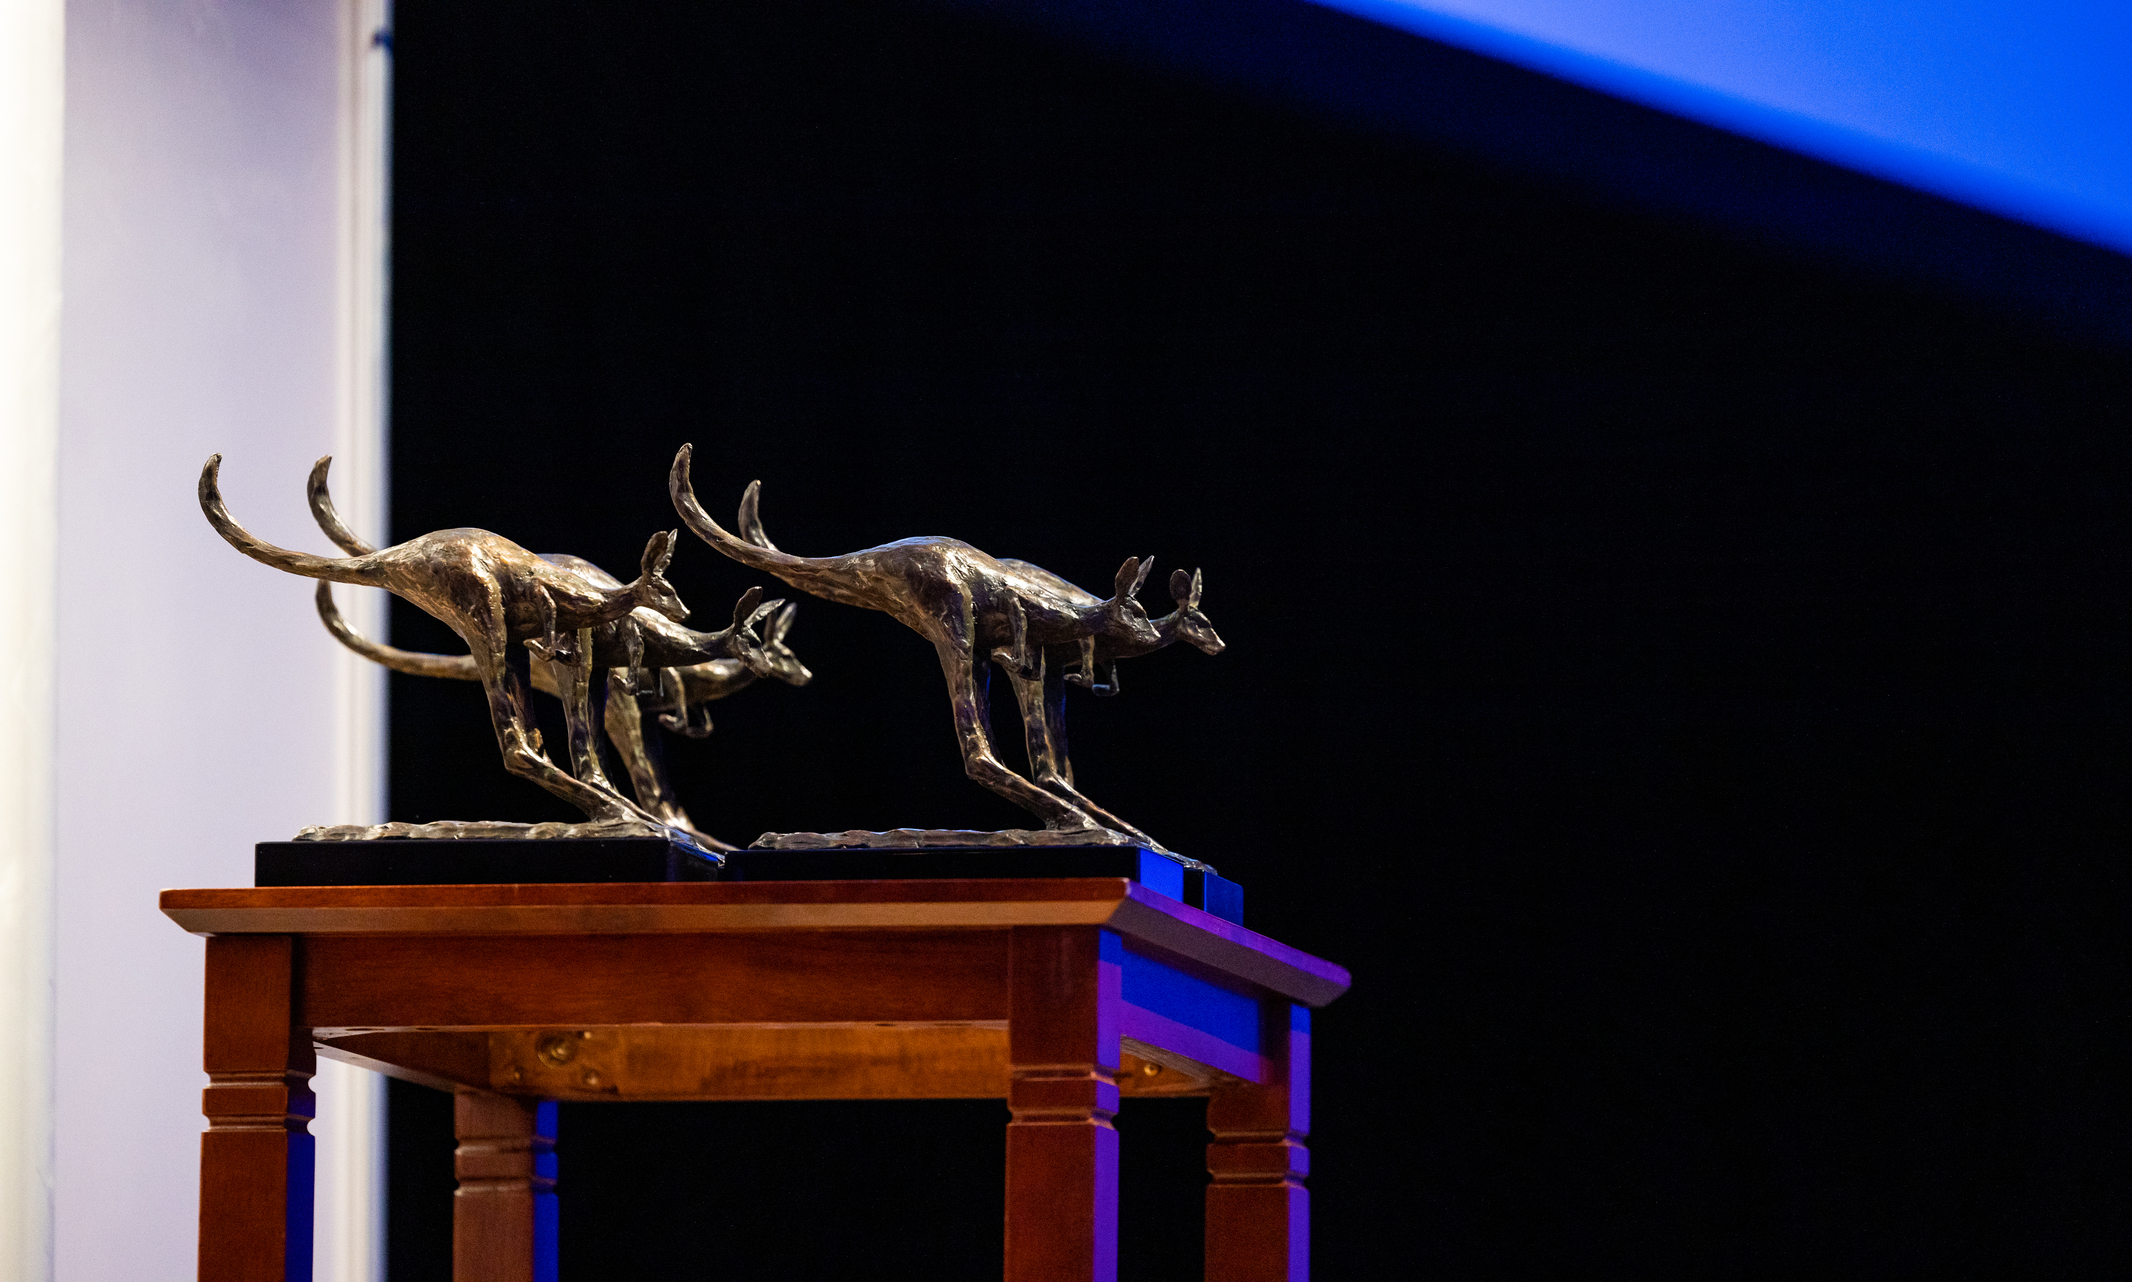 Alumni awards shaped like kangaroos are lined up on a table